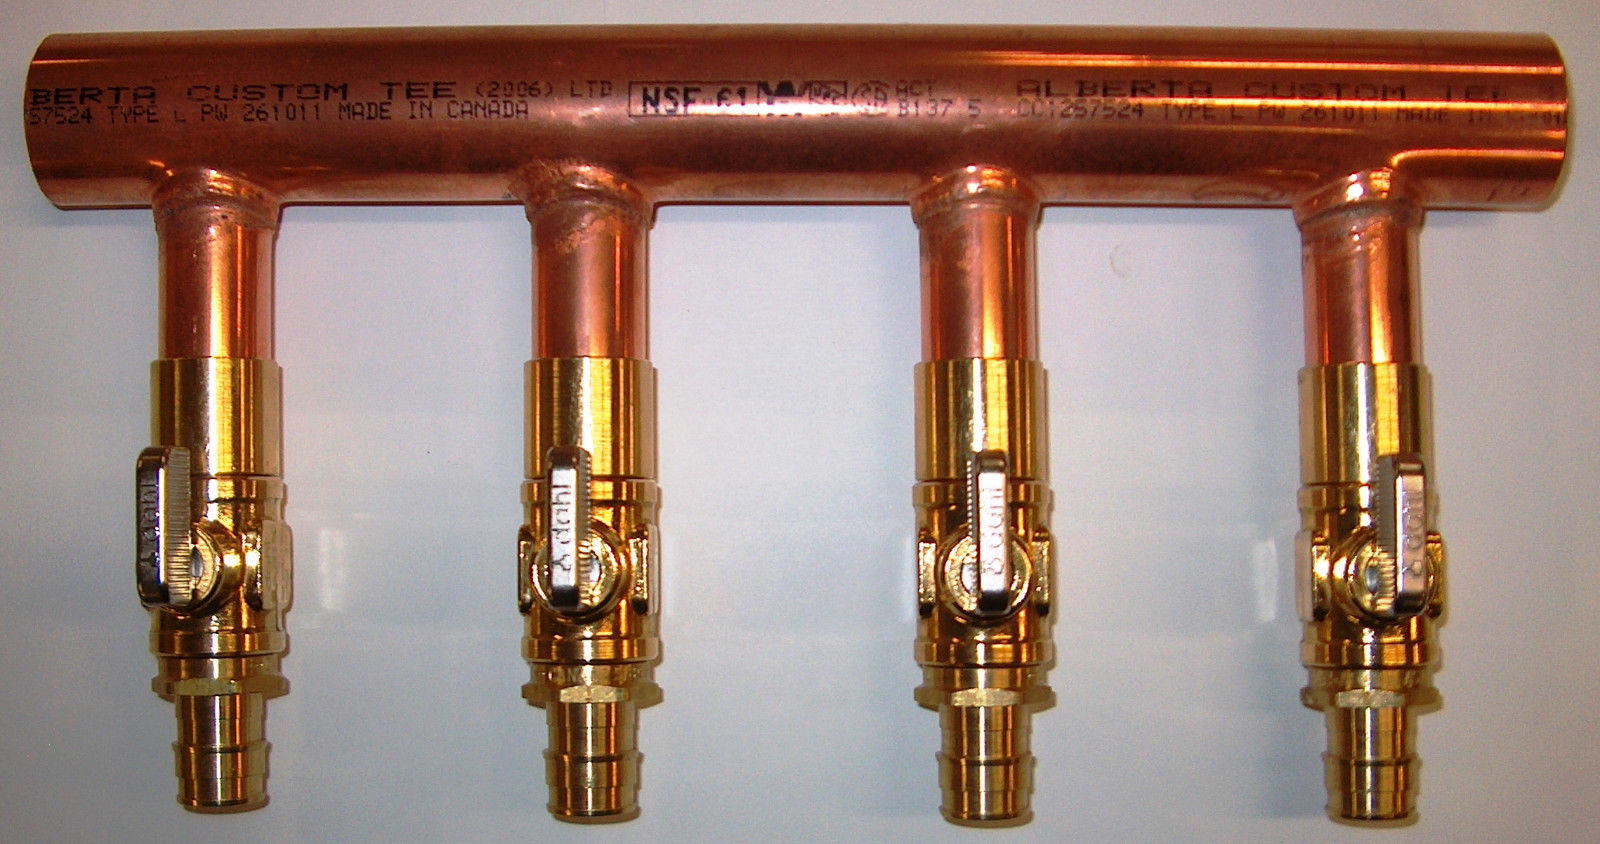 2 Loop Plumbing Manifold w/ 3/4" trunk & 1/2" pex ball valves blue handle … 